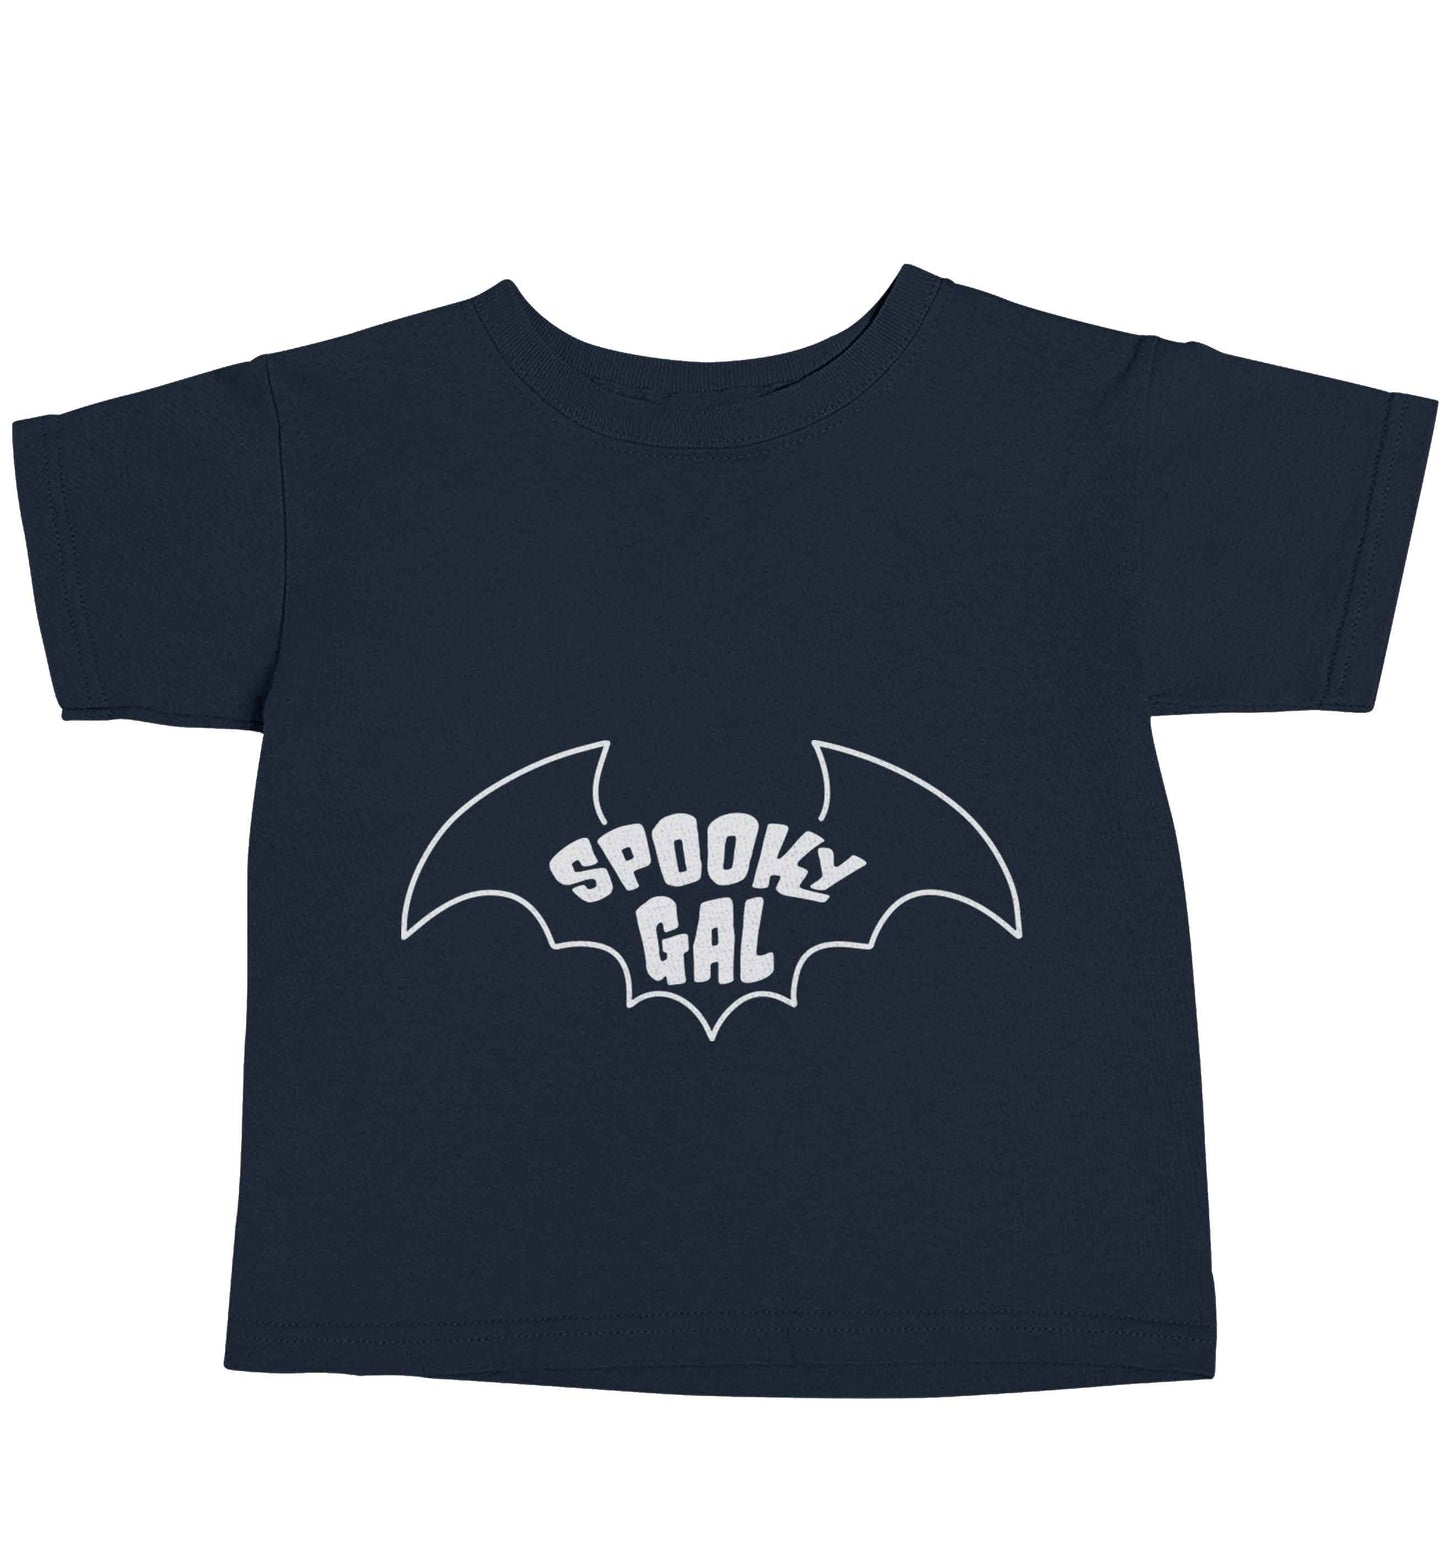 Spooky gal Kit navy baby toddler Tshirt 2 Years